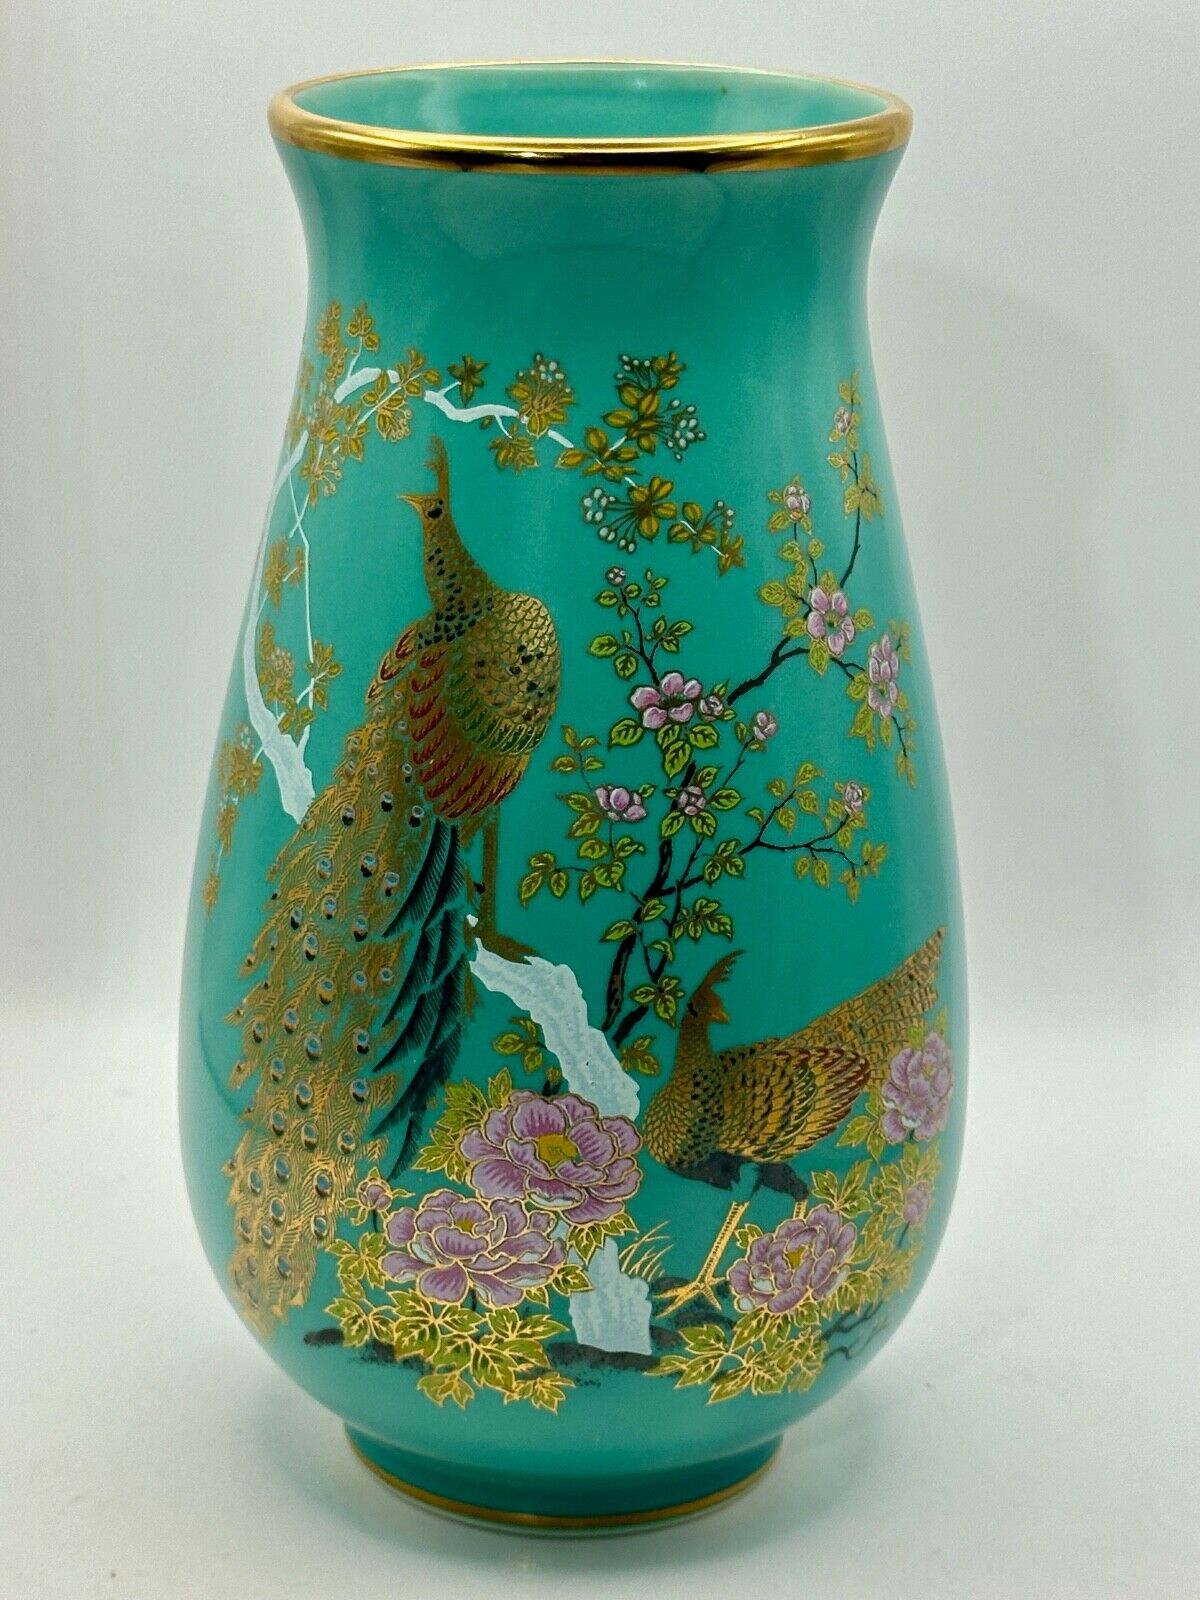 Vintage Asian Japanese Chinese Enamel Porcelain Ceramic Vase Peacock Teal